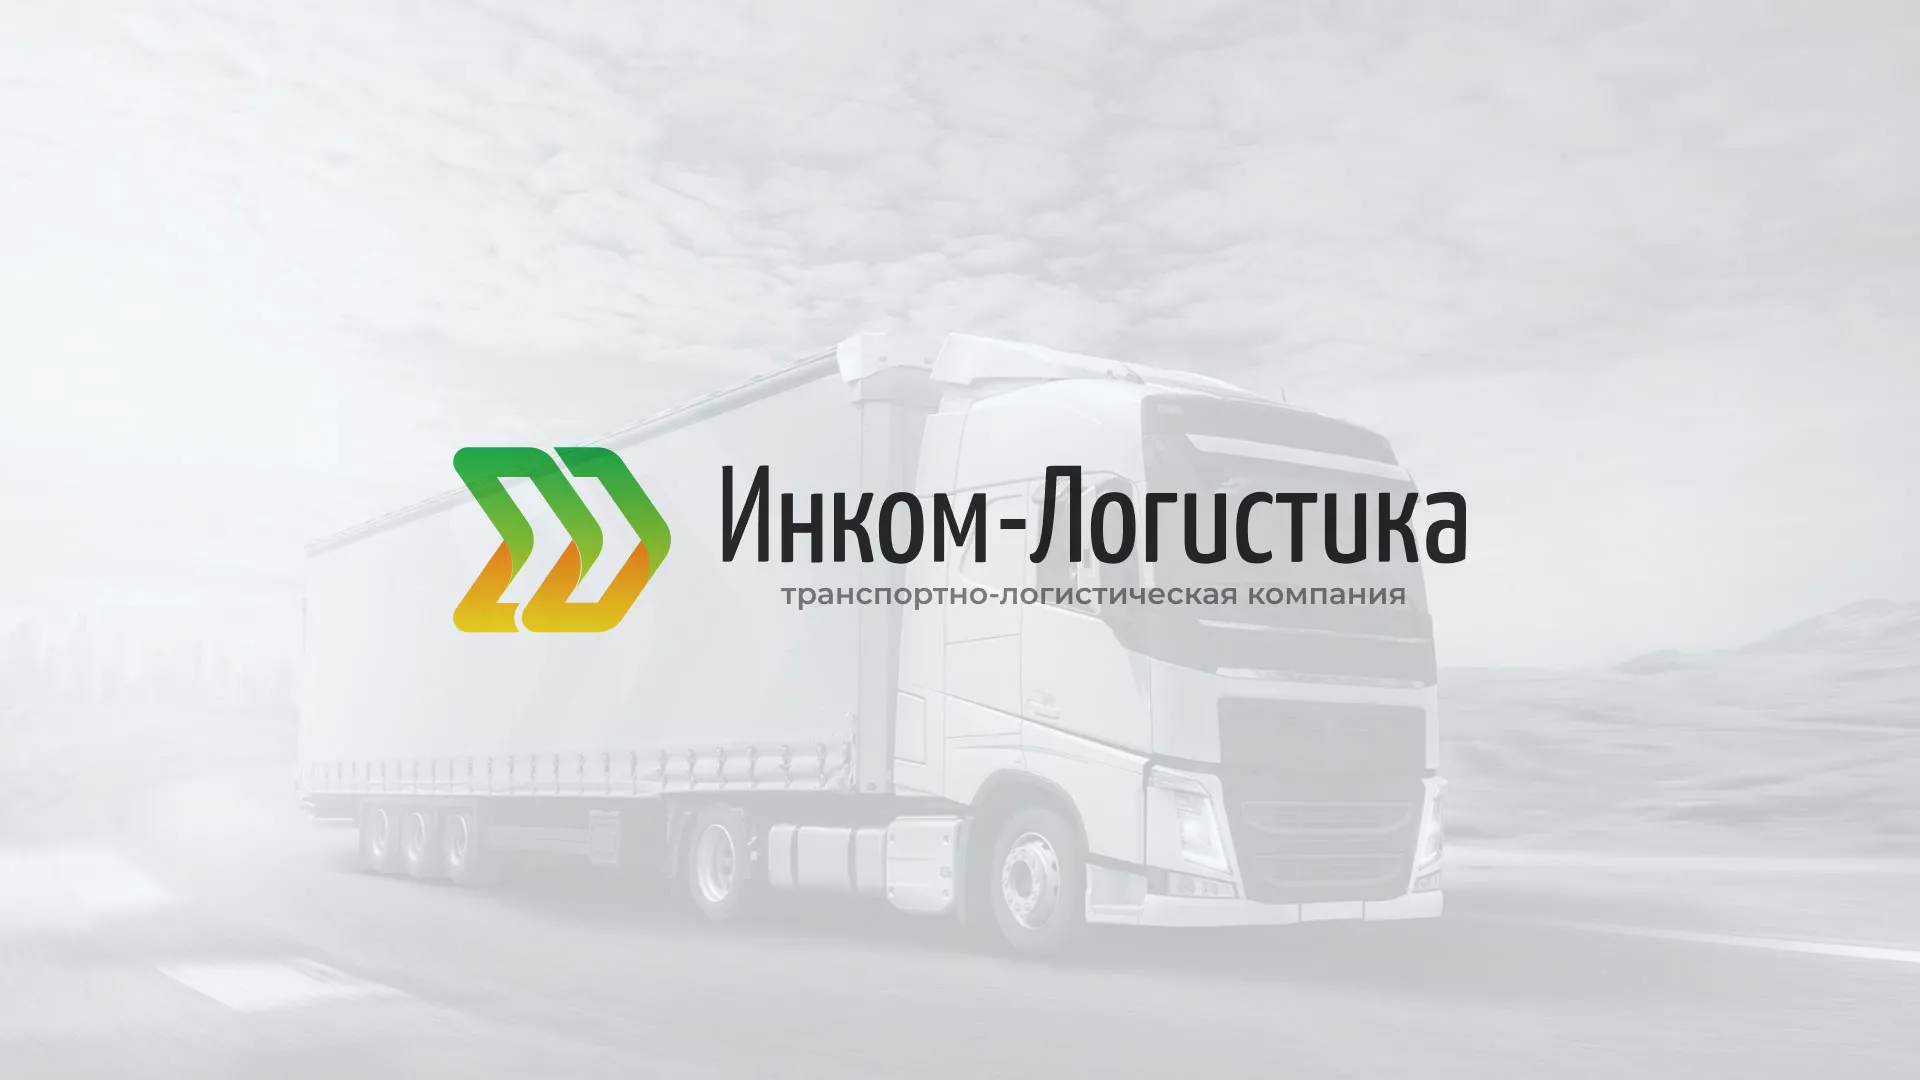 Разработка логотипа и сайта компании «Инком-Логистика» в Хабаровске